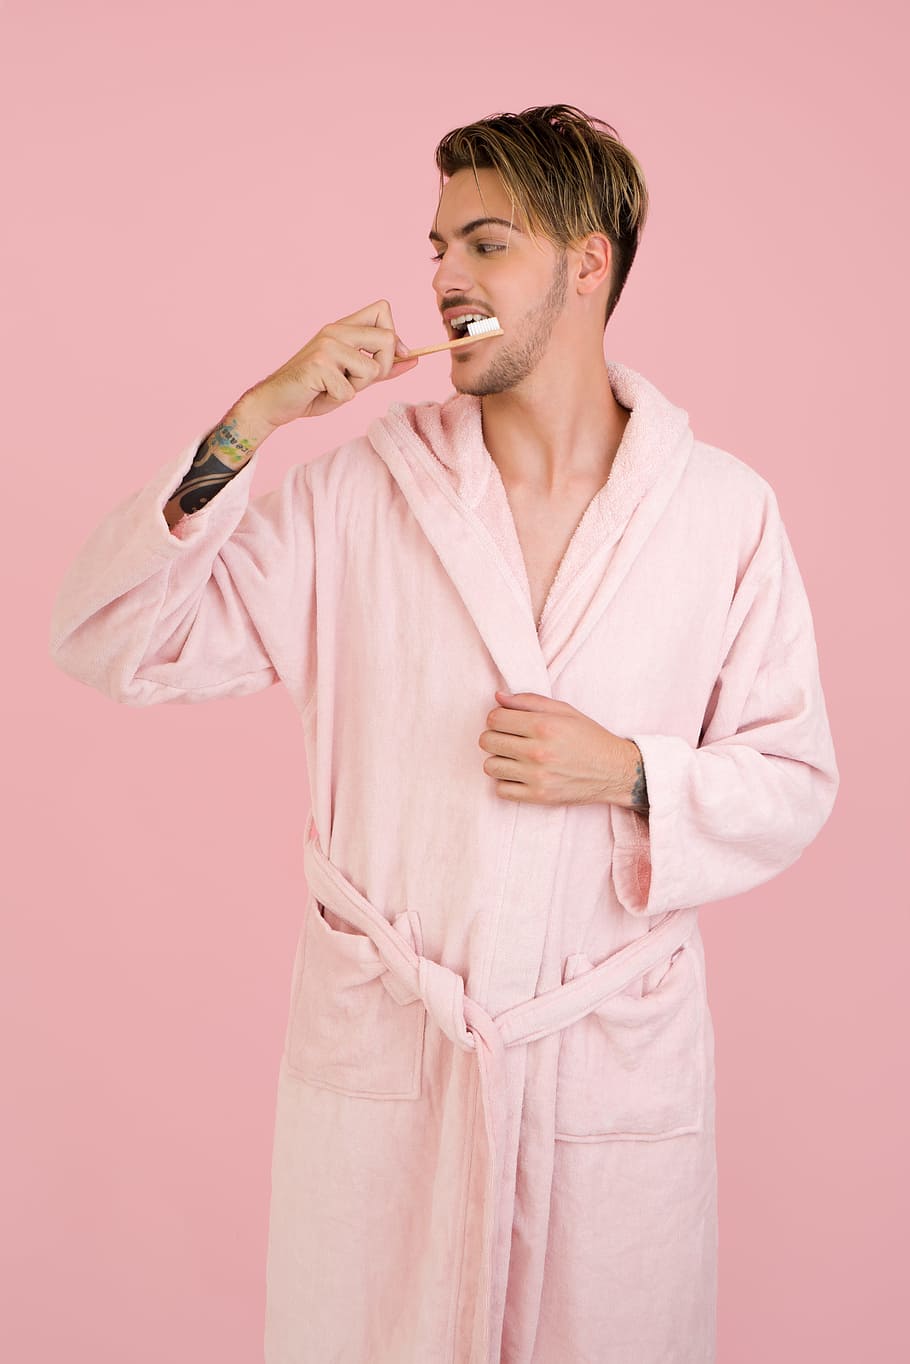 bathrobe, morning, brushing teeth, man, male, handsome man